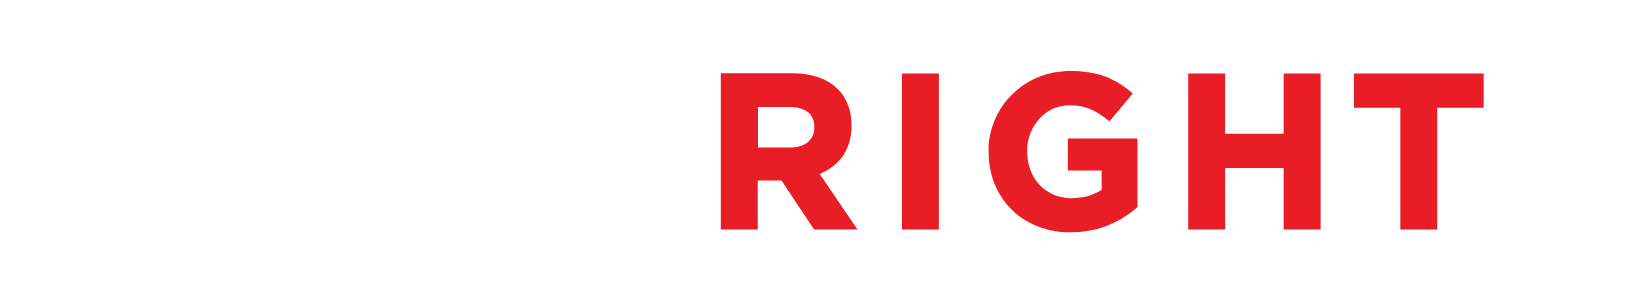 HireRight logo large for dark backgrounds (transparent PNG)